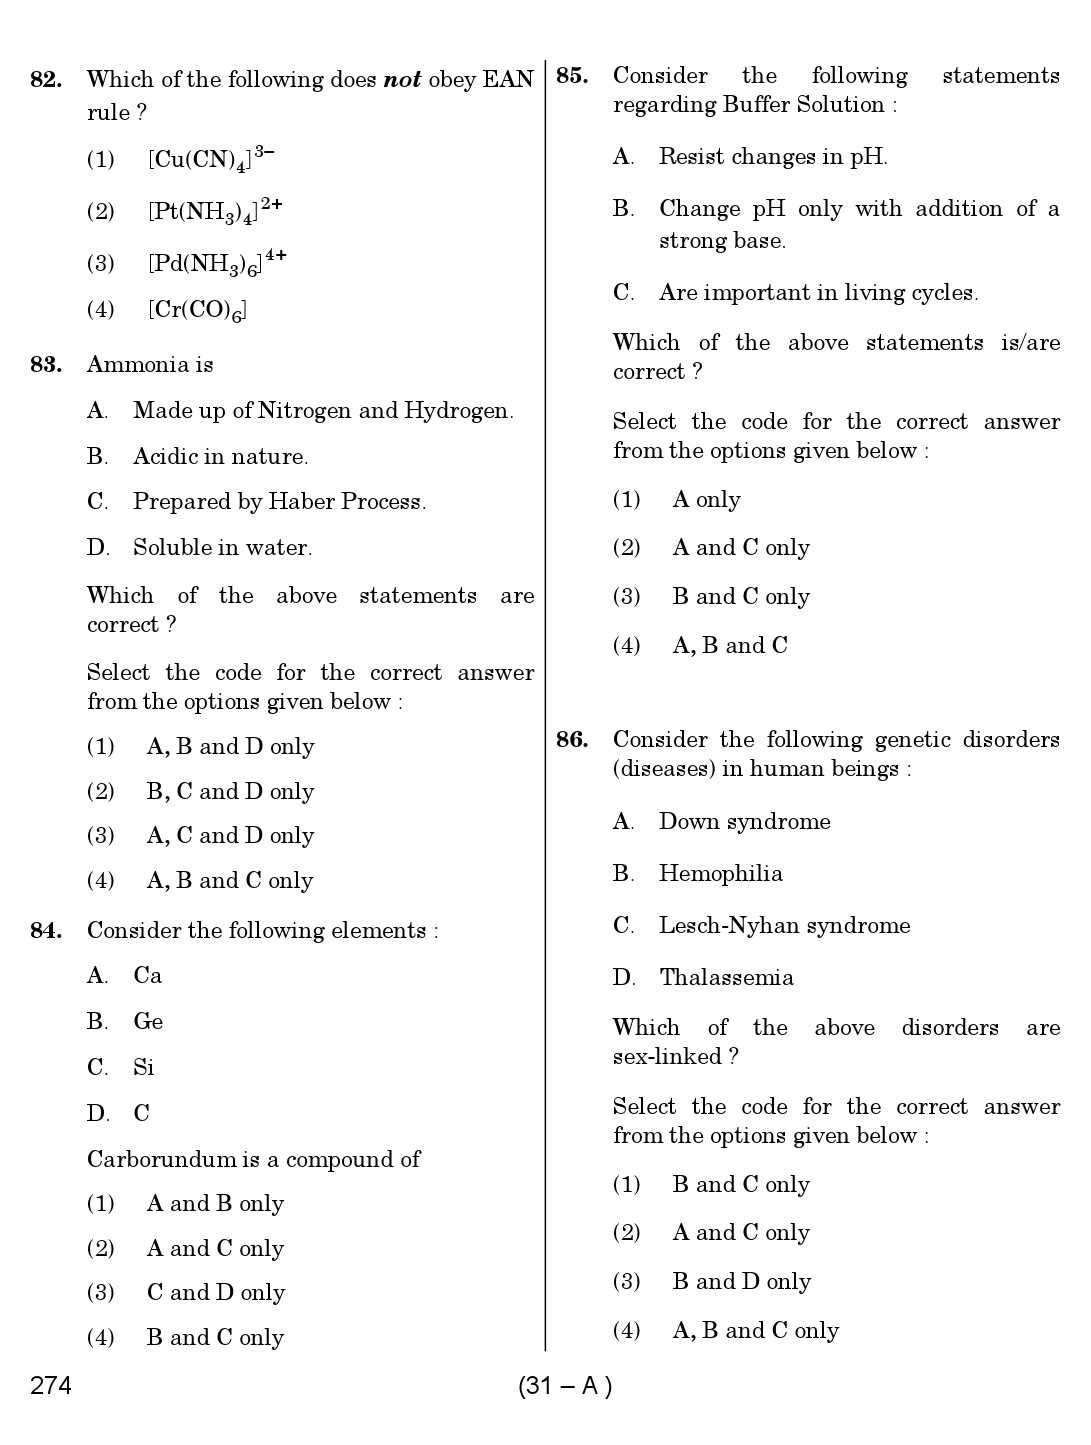 Karnataka PSC Science Teacher Exam Sample Question Paper Subject code 274 31